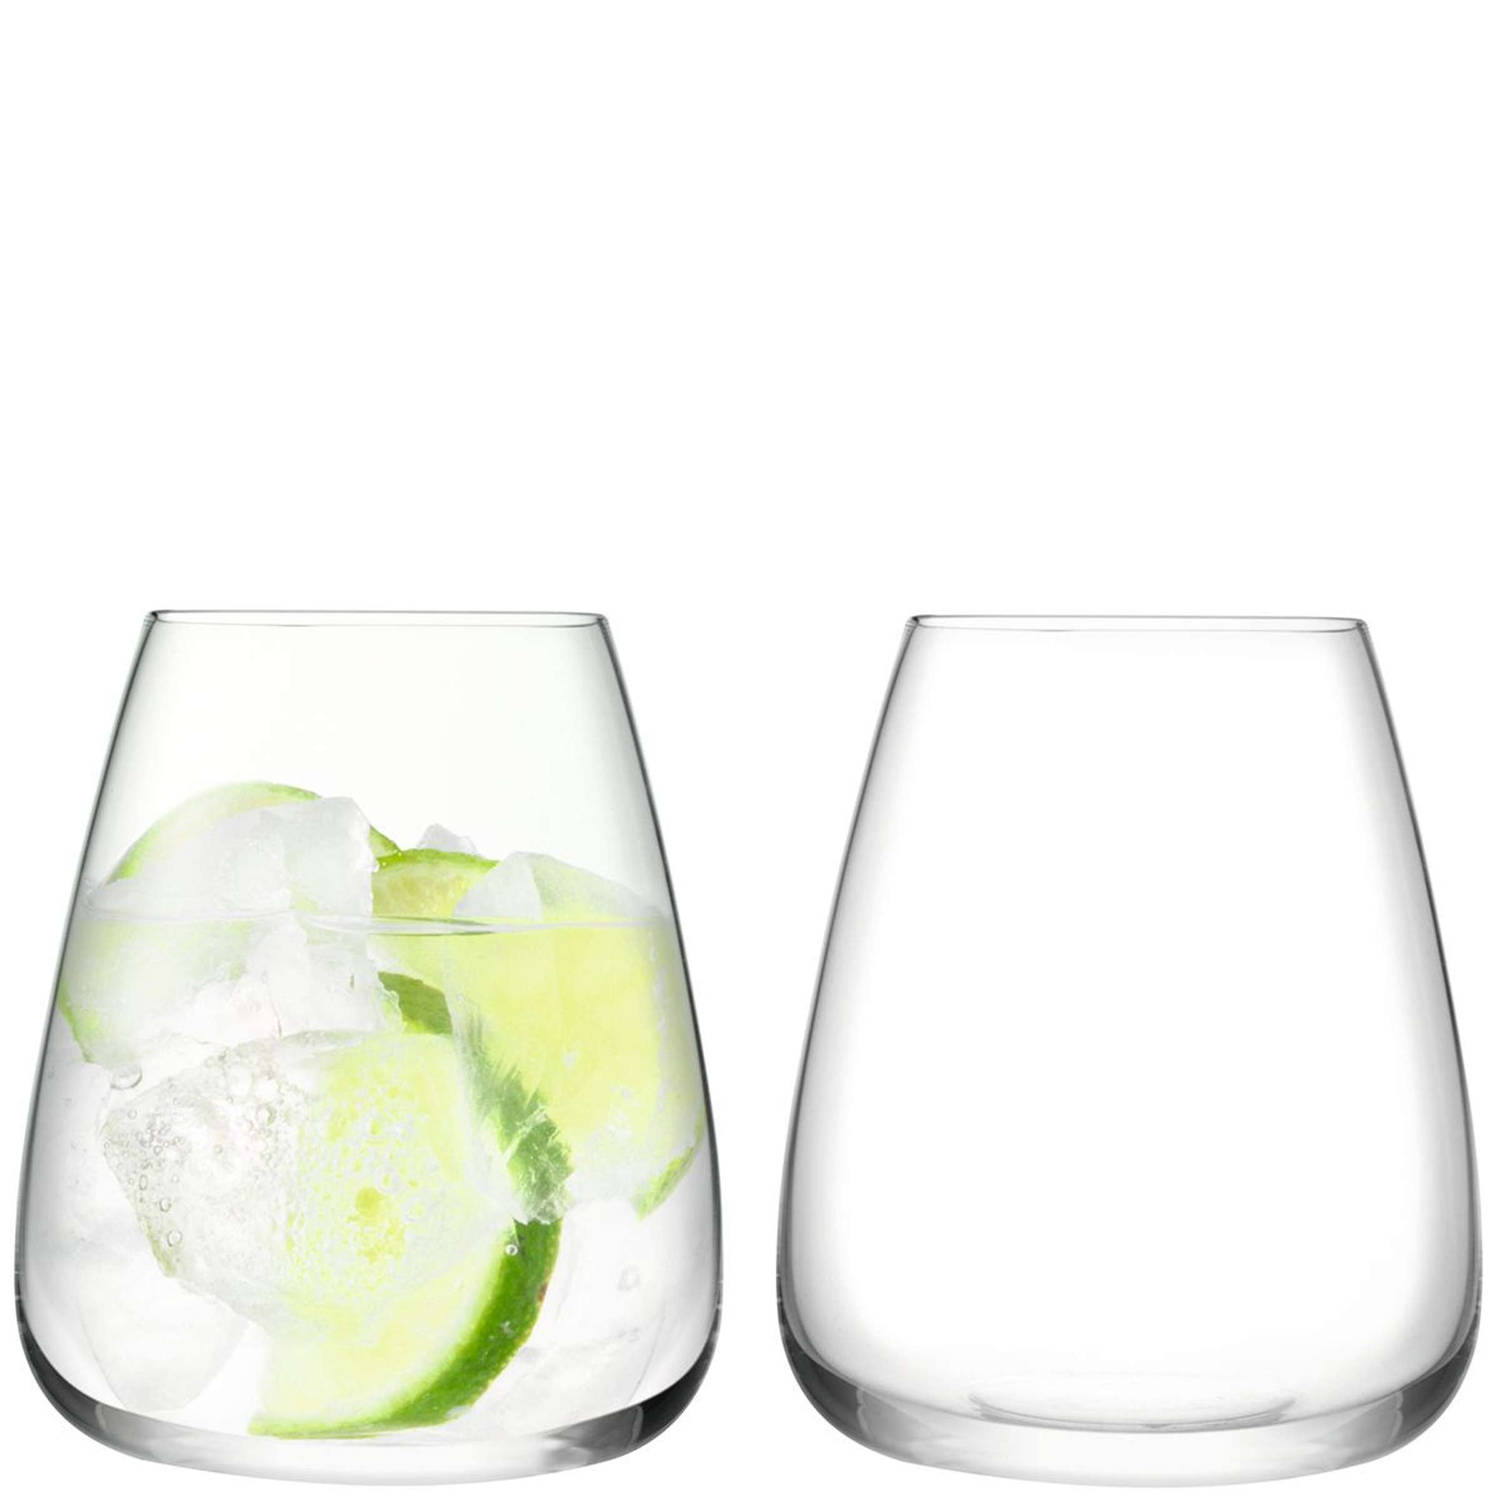 L.S.A. - Wine Culture Glas 590 ml Set van 2 Stuks - Glas - Transparant